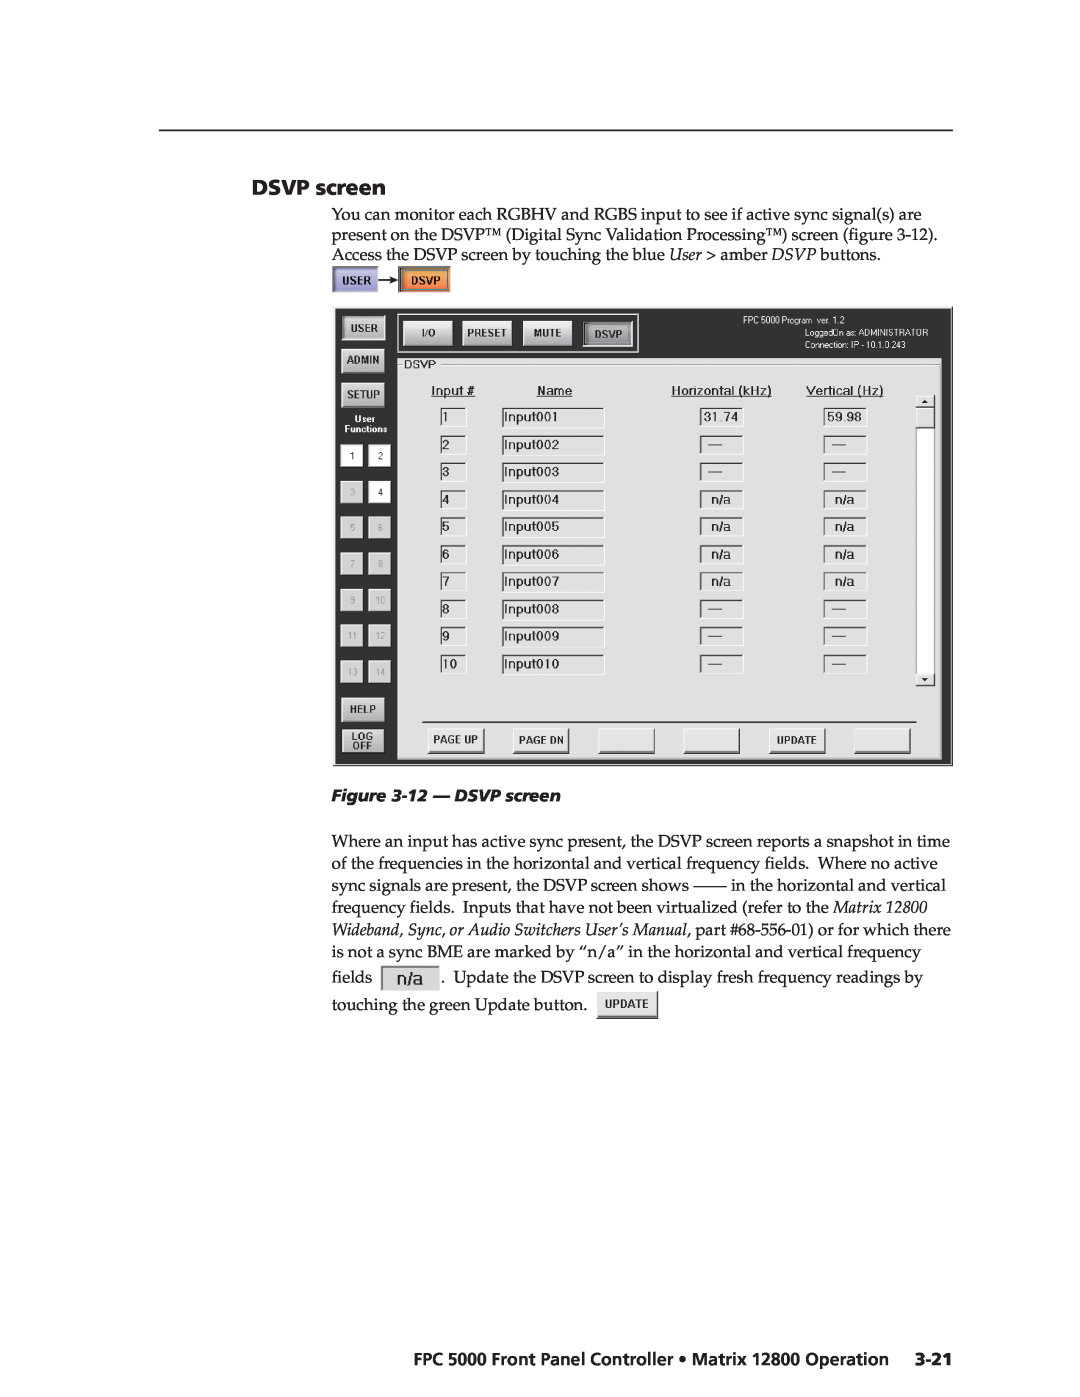 Extron electronic manual 12 - DSVP screen, FPC 5000 Front Panel Controller Matrix 12800 Operation 